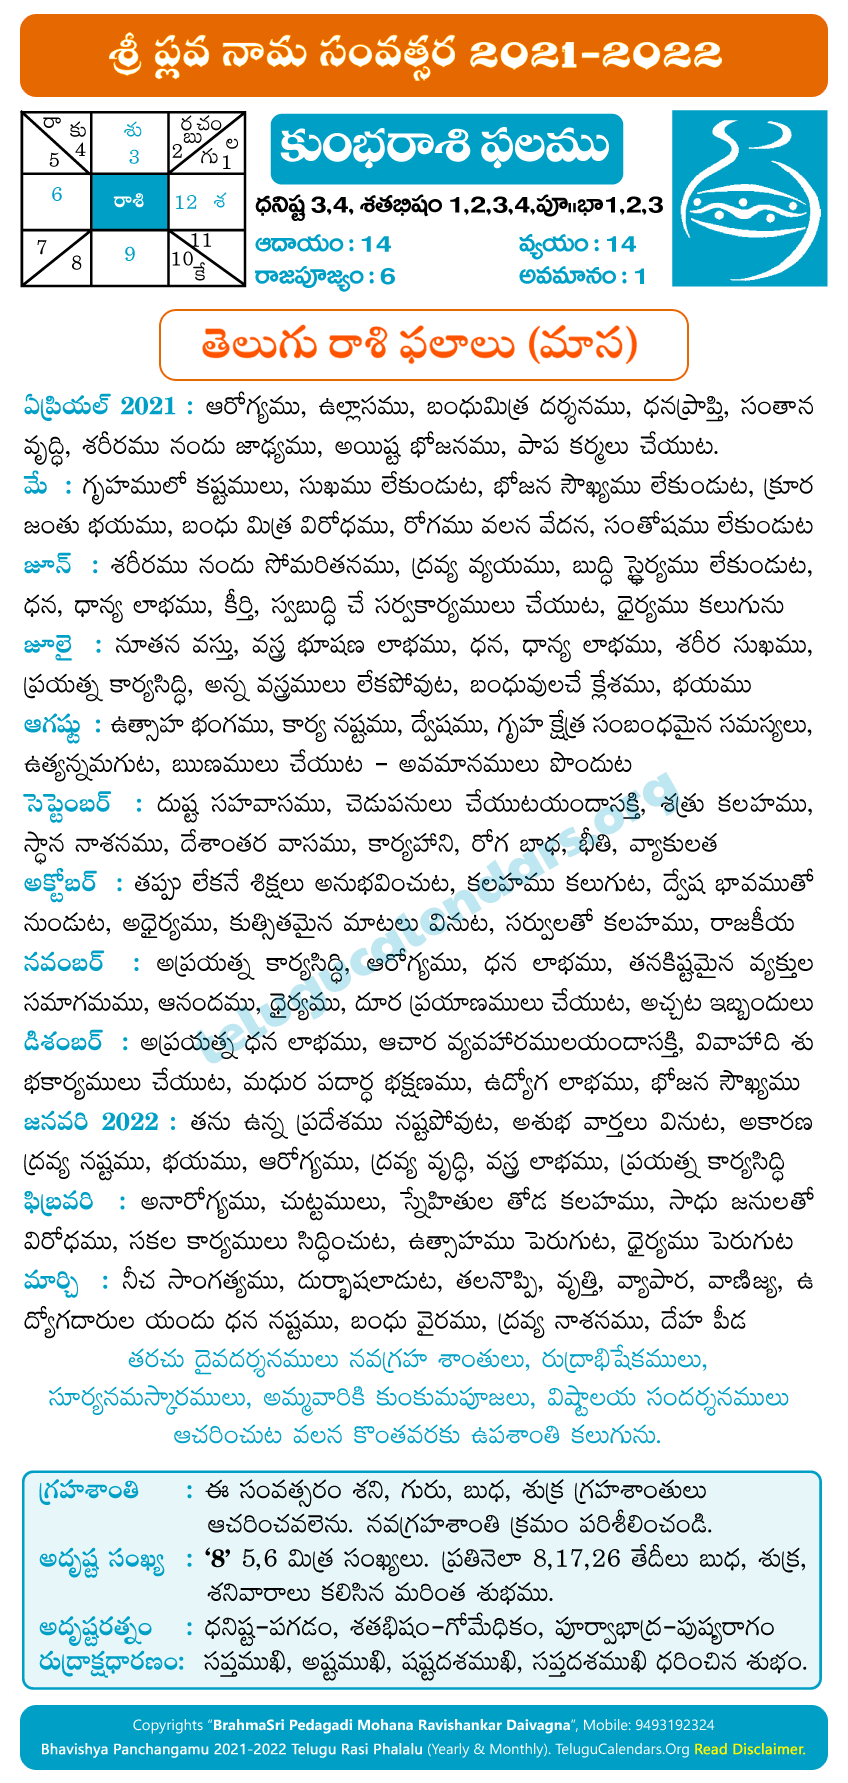 Telugu Rasi Phalalu Calendar 2022 [Revised Calendar